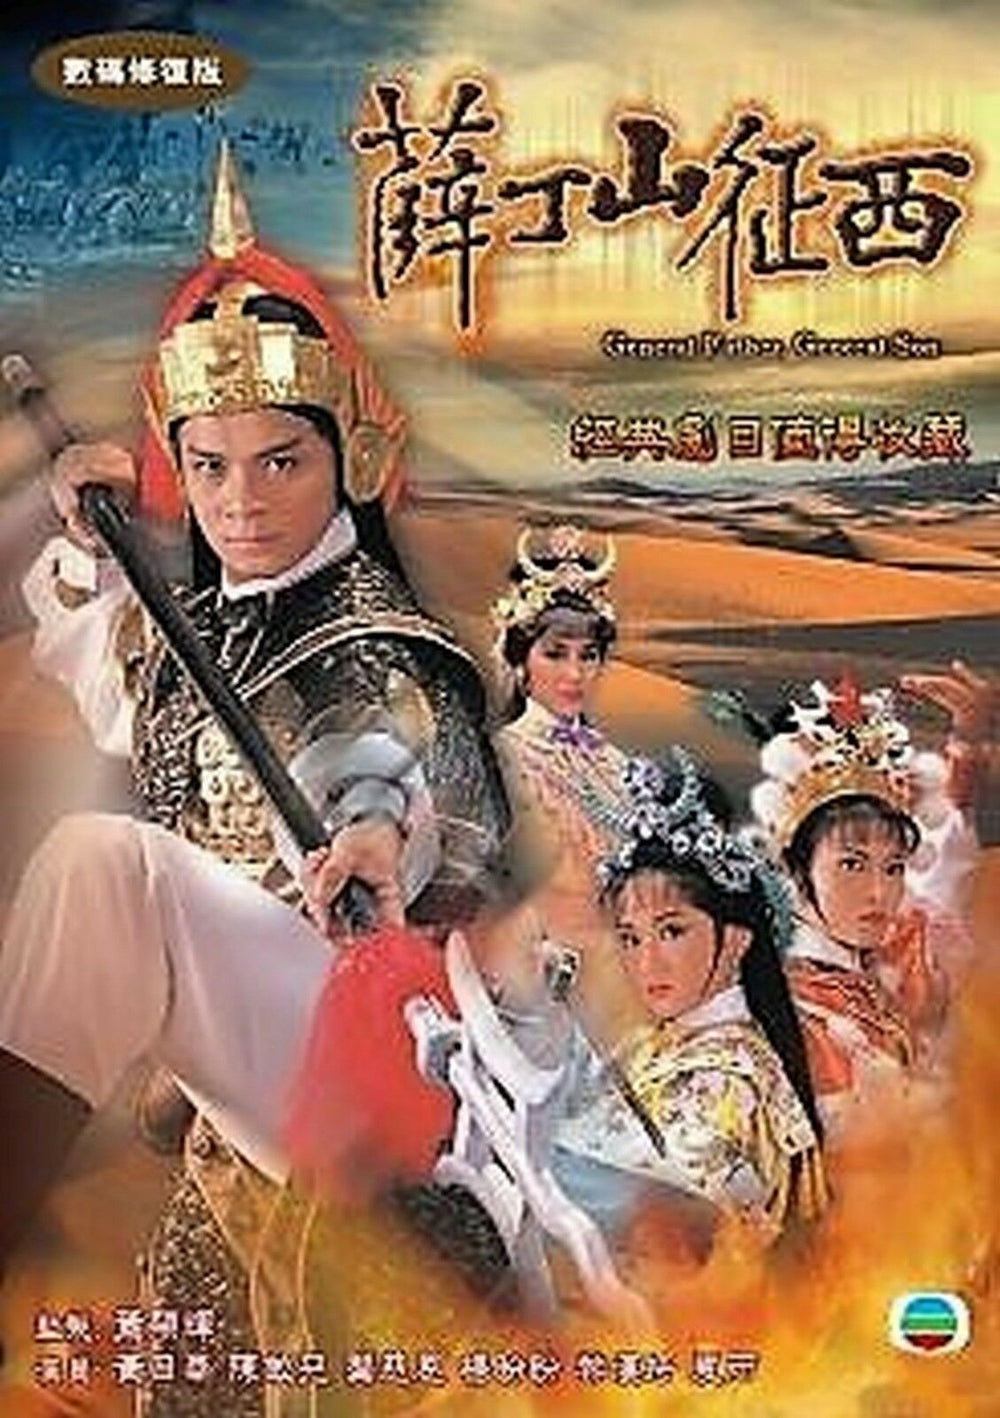 GENERAL FATHER, GENERAL SON 薛丁山征西 1986 TVB (4DVD) NON ENGLISH SUB (REGION FREE)